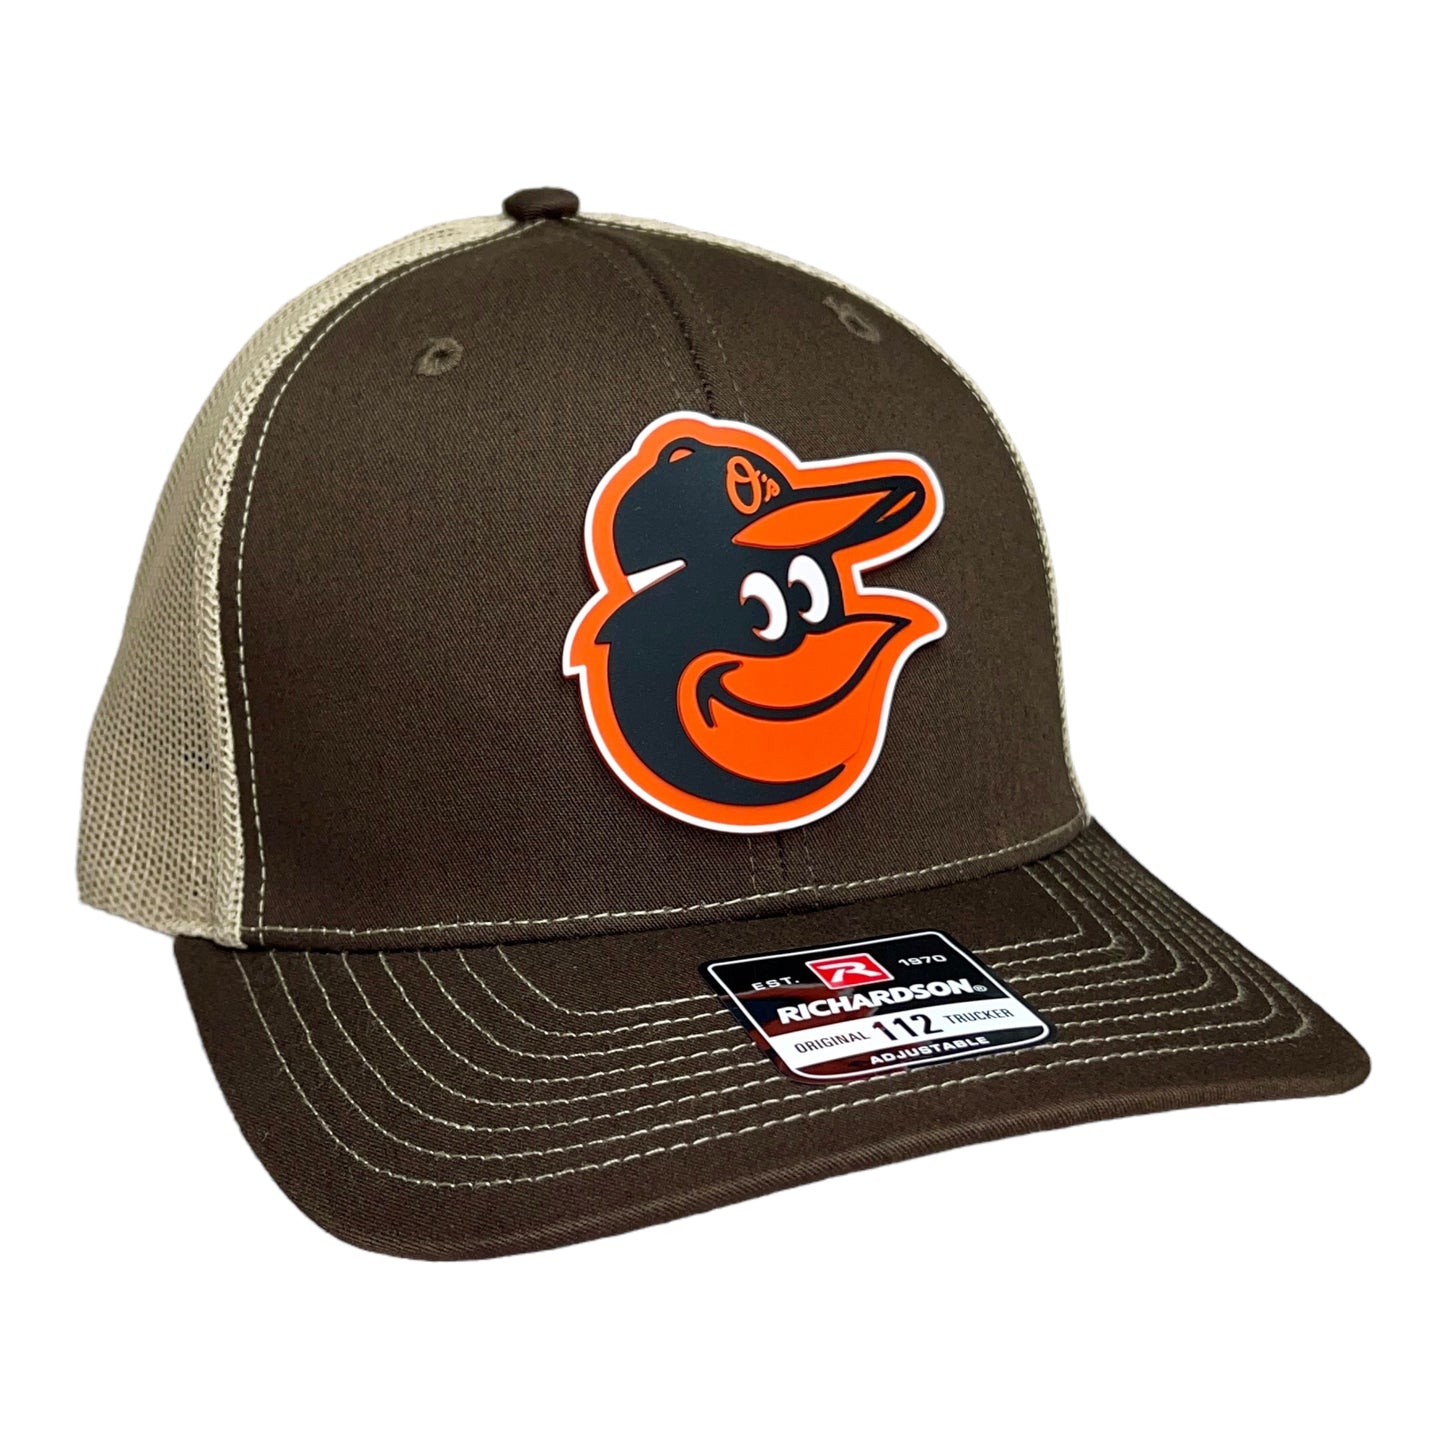 Baltimore Orioles 3D Snapback Trucker Hat- Brown/ Tan